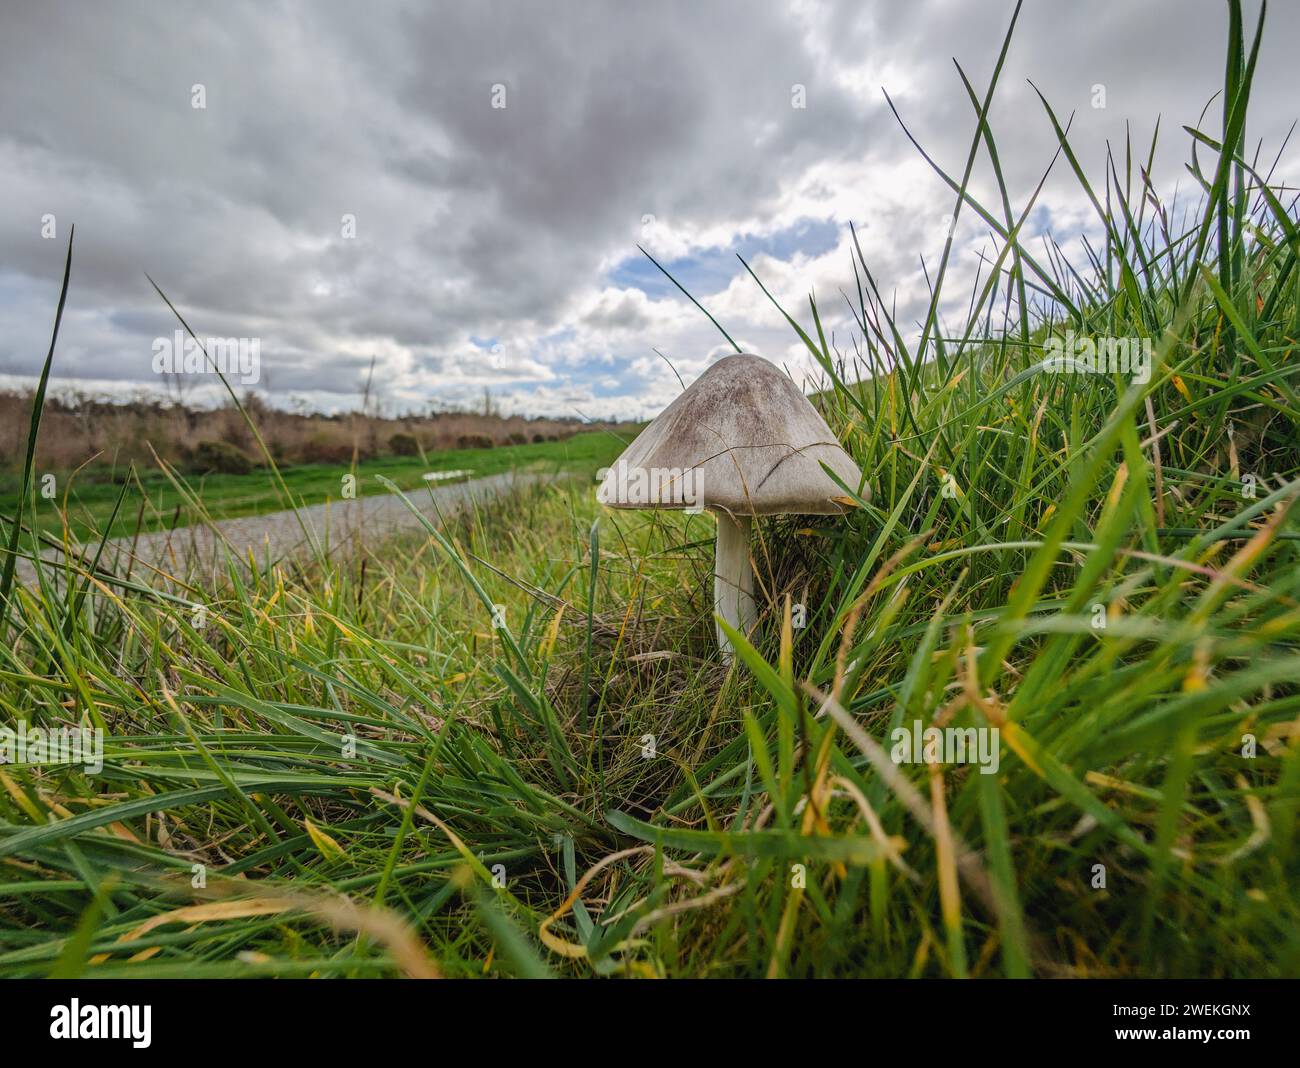 A tiny mushroom resting peacefully among the roadside grass. Stock Photo